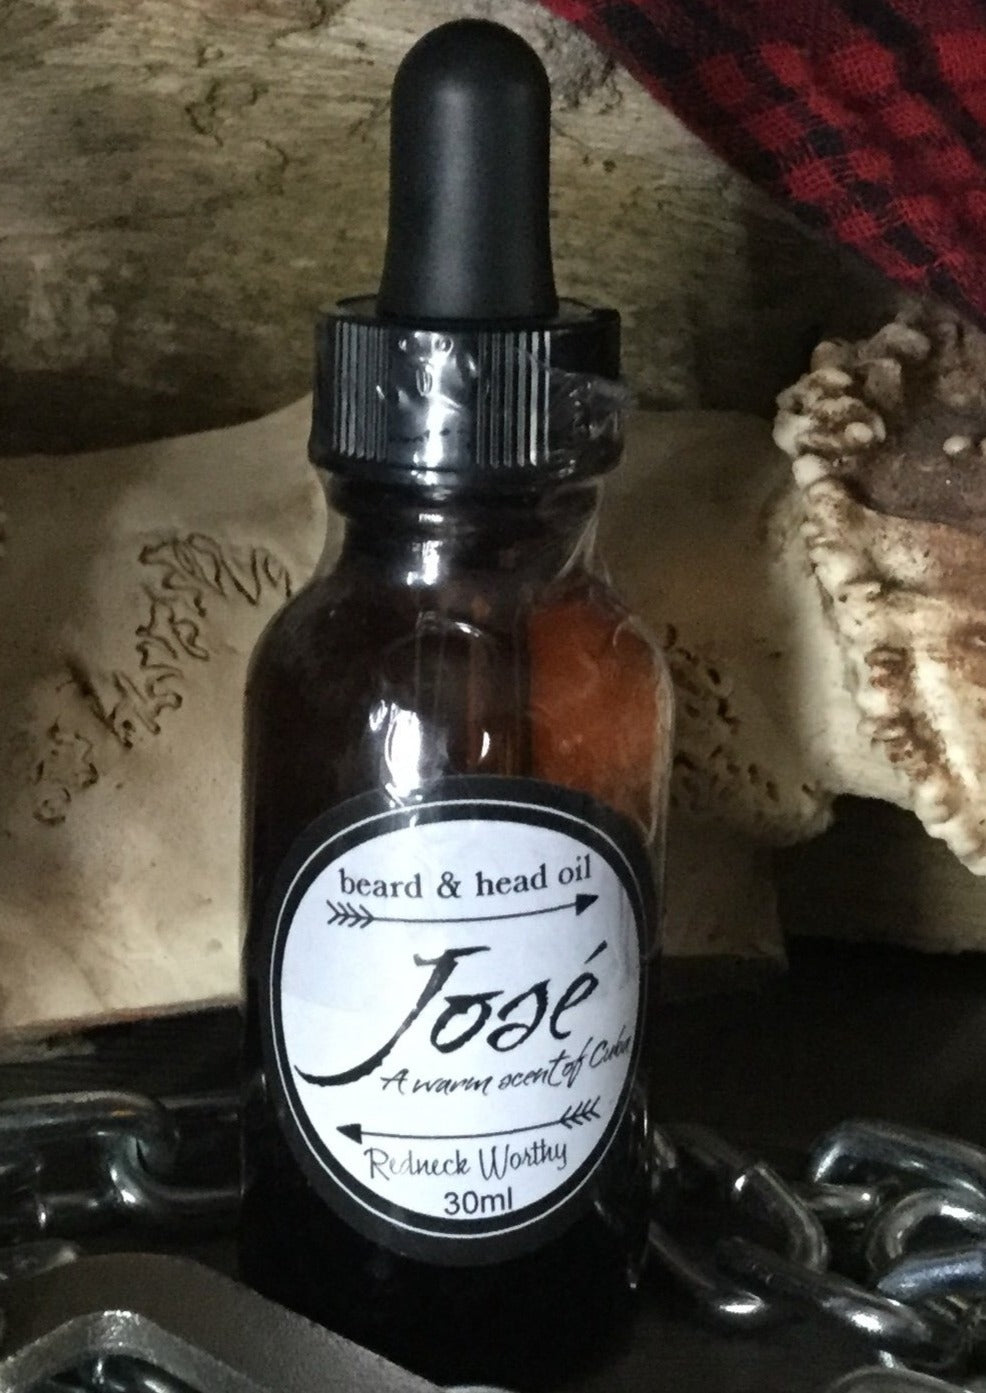 José beard oil